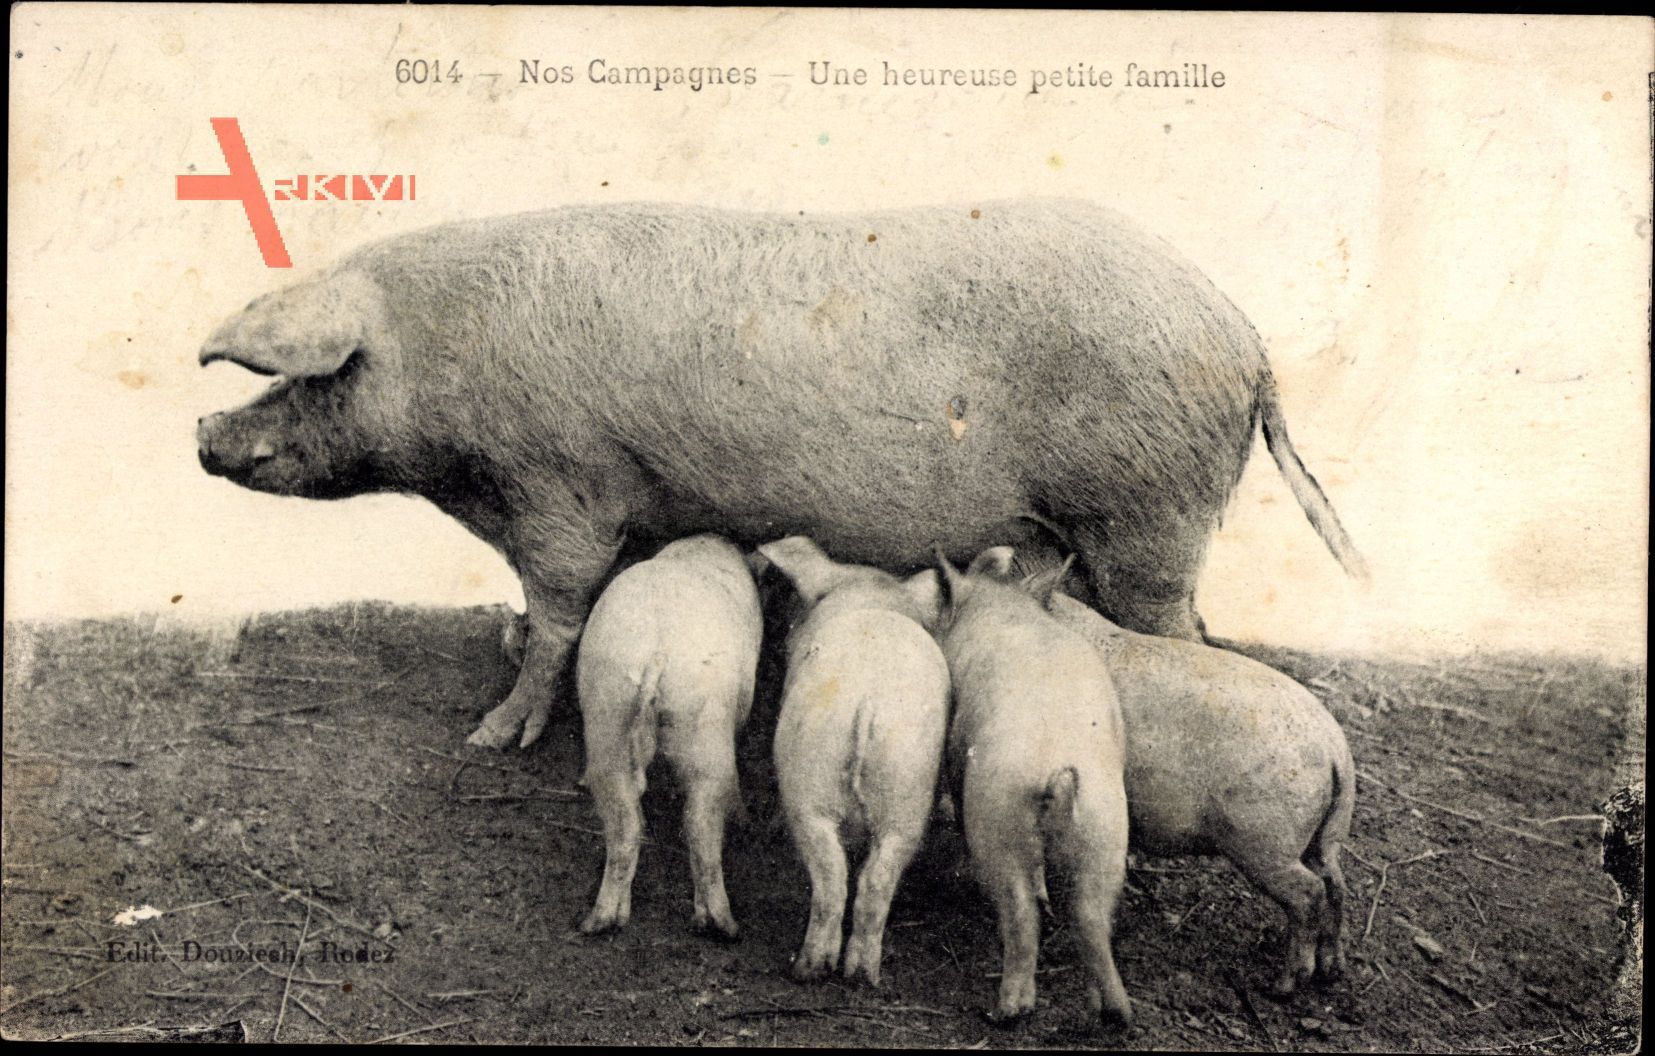 Nos Campagnes, Une heurese petite famille, Schweinefamilie, Ferkel